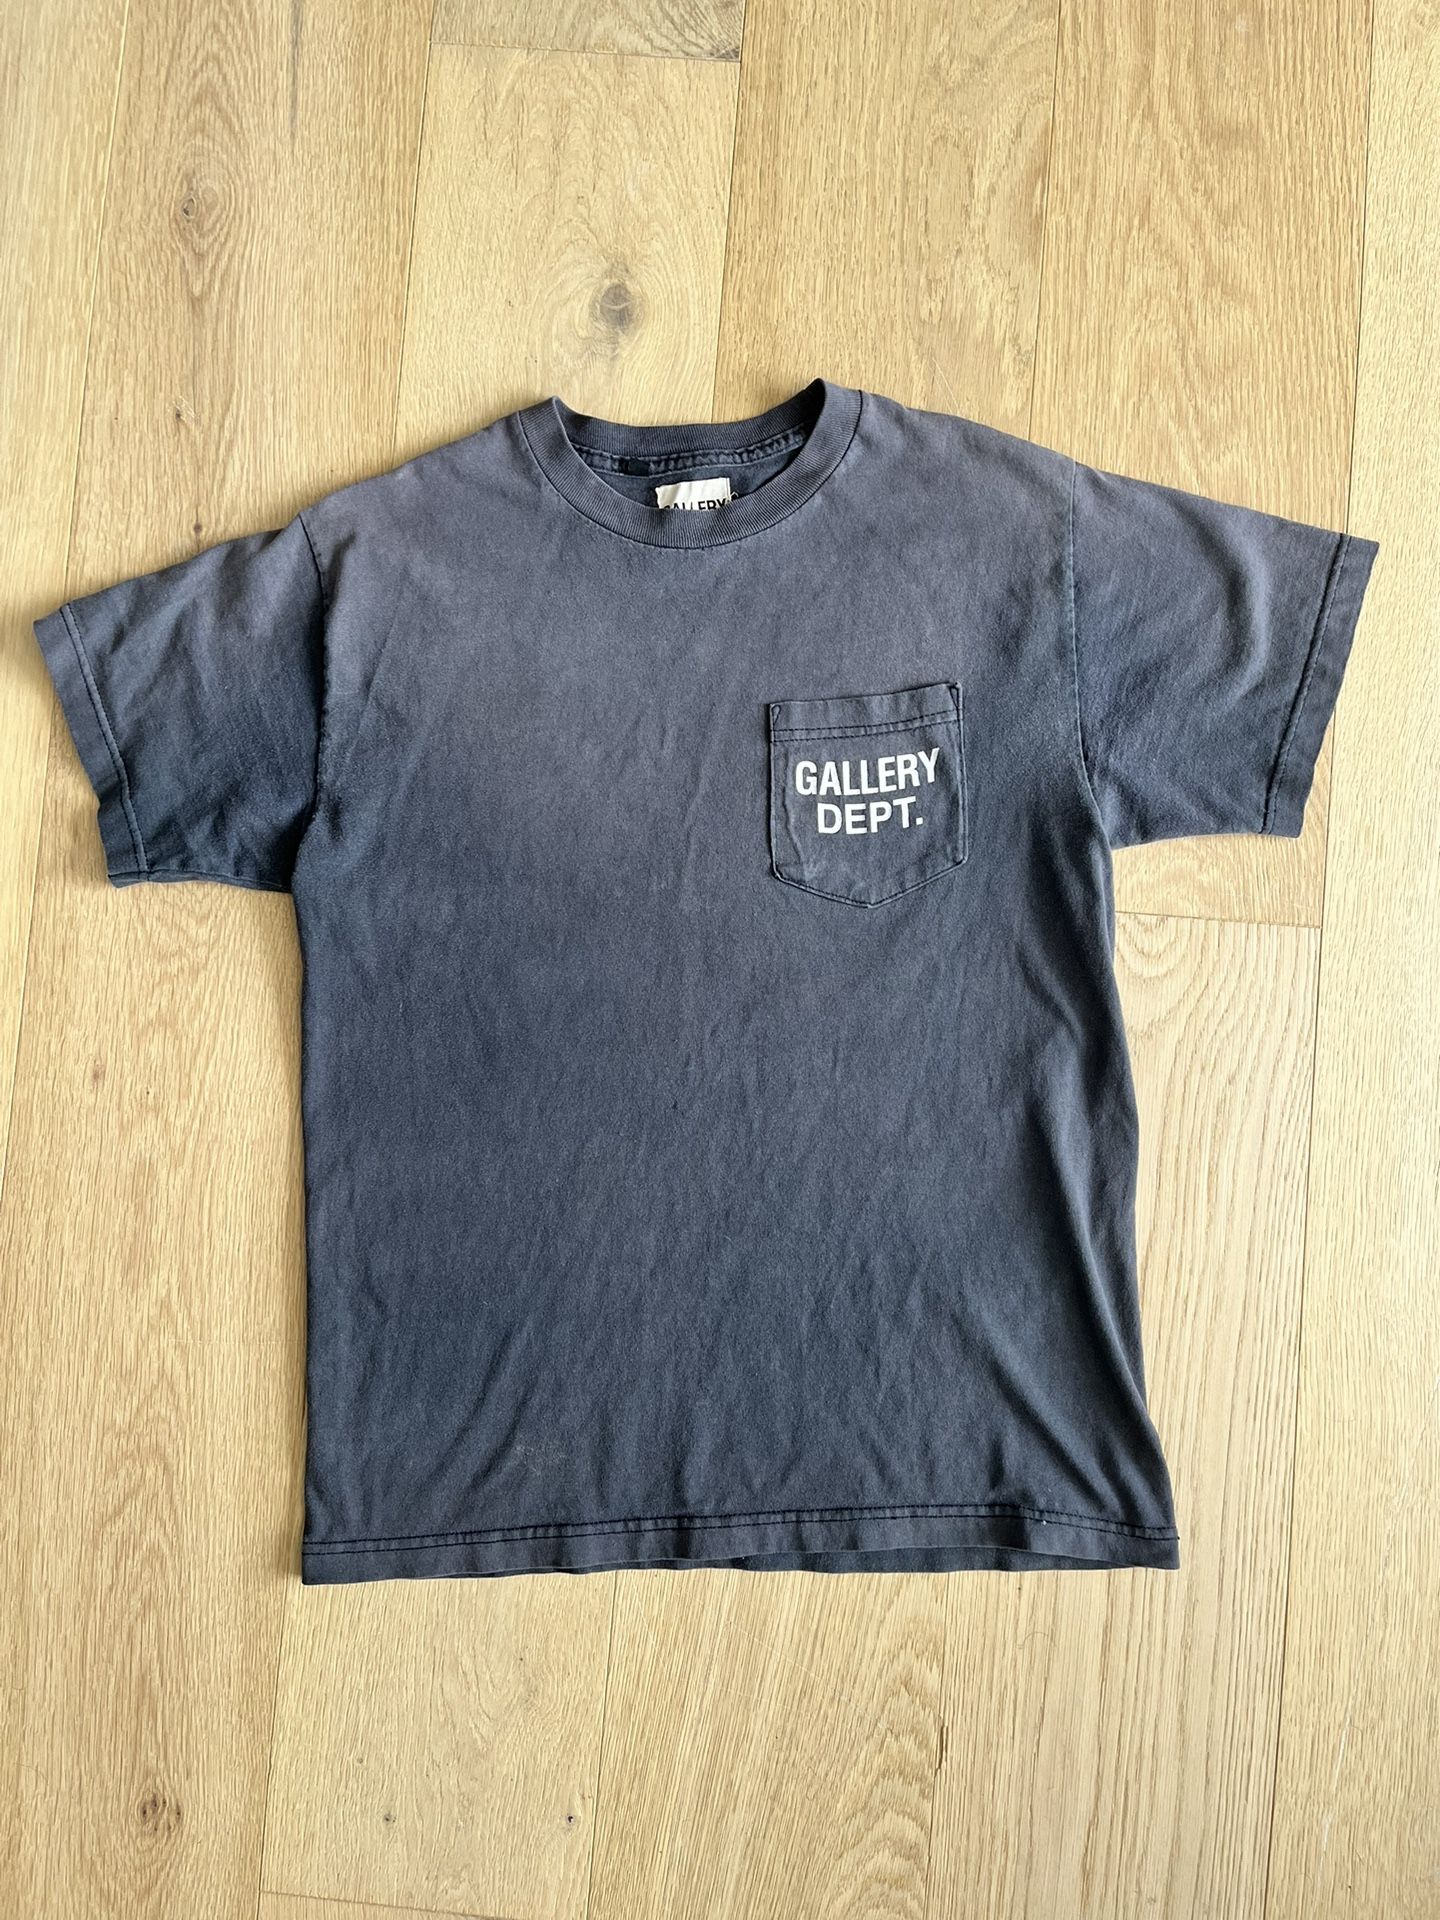 GALLERY DEPT.  Vintage Black Shirt Small 